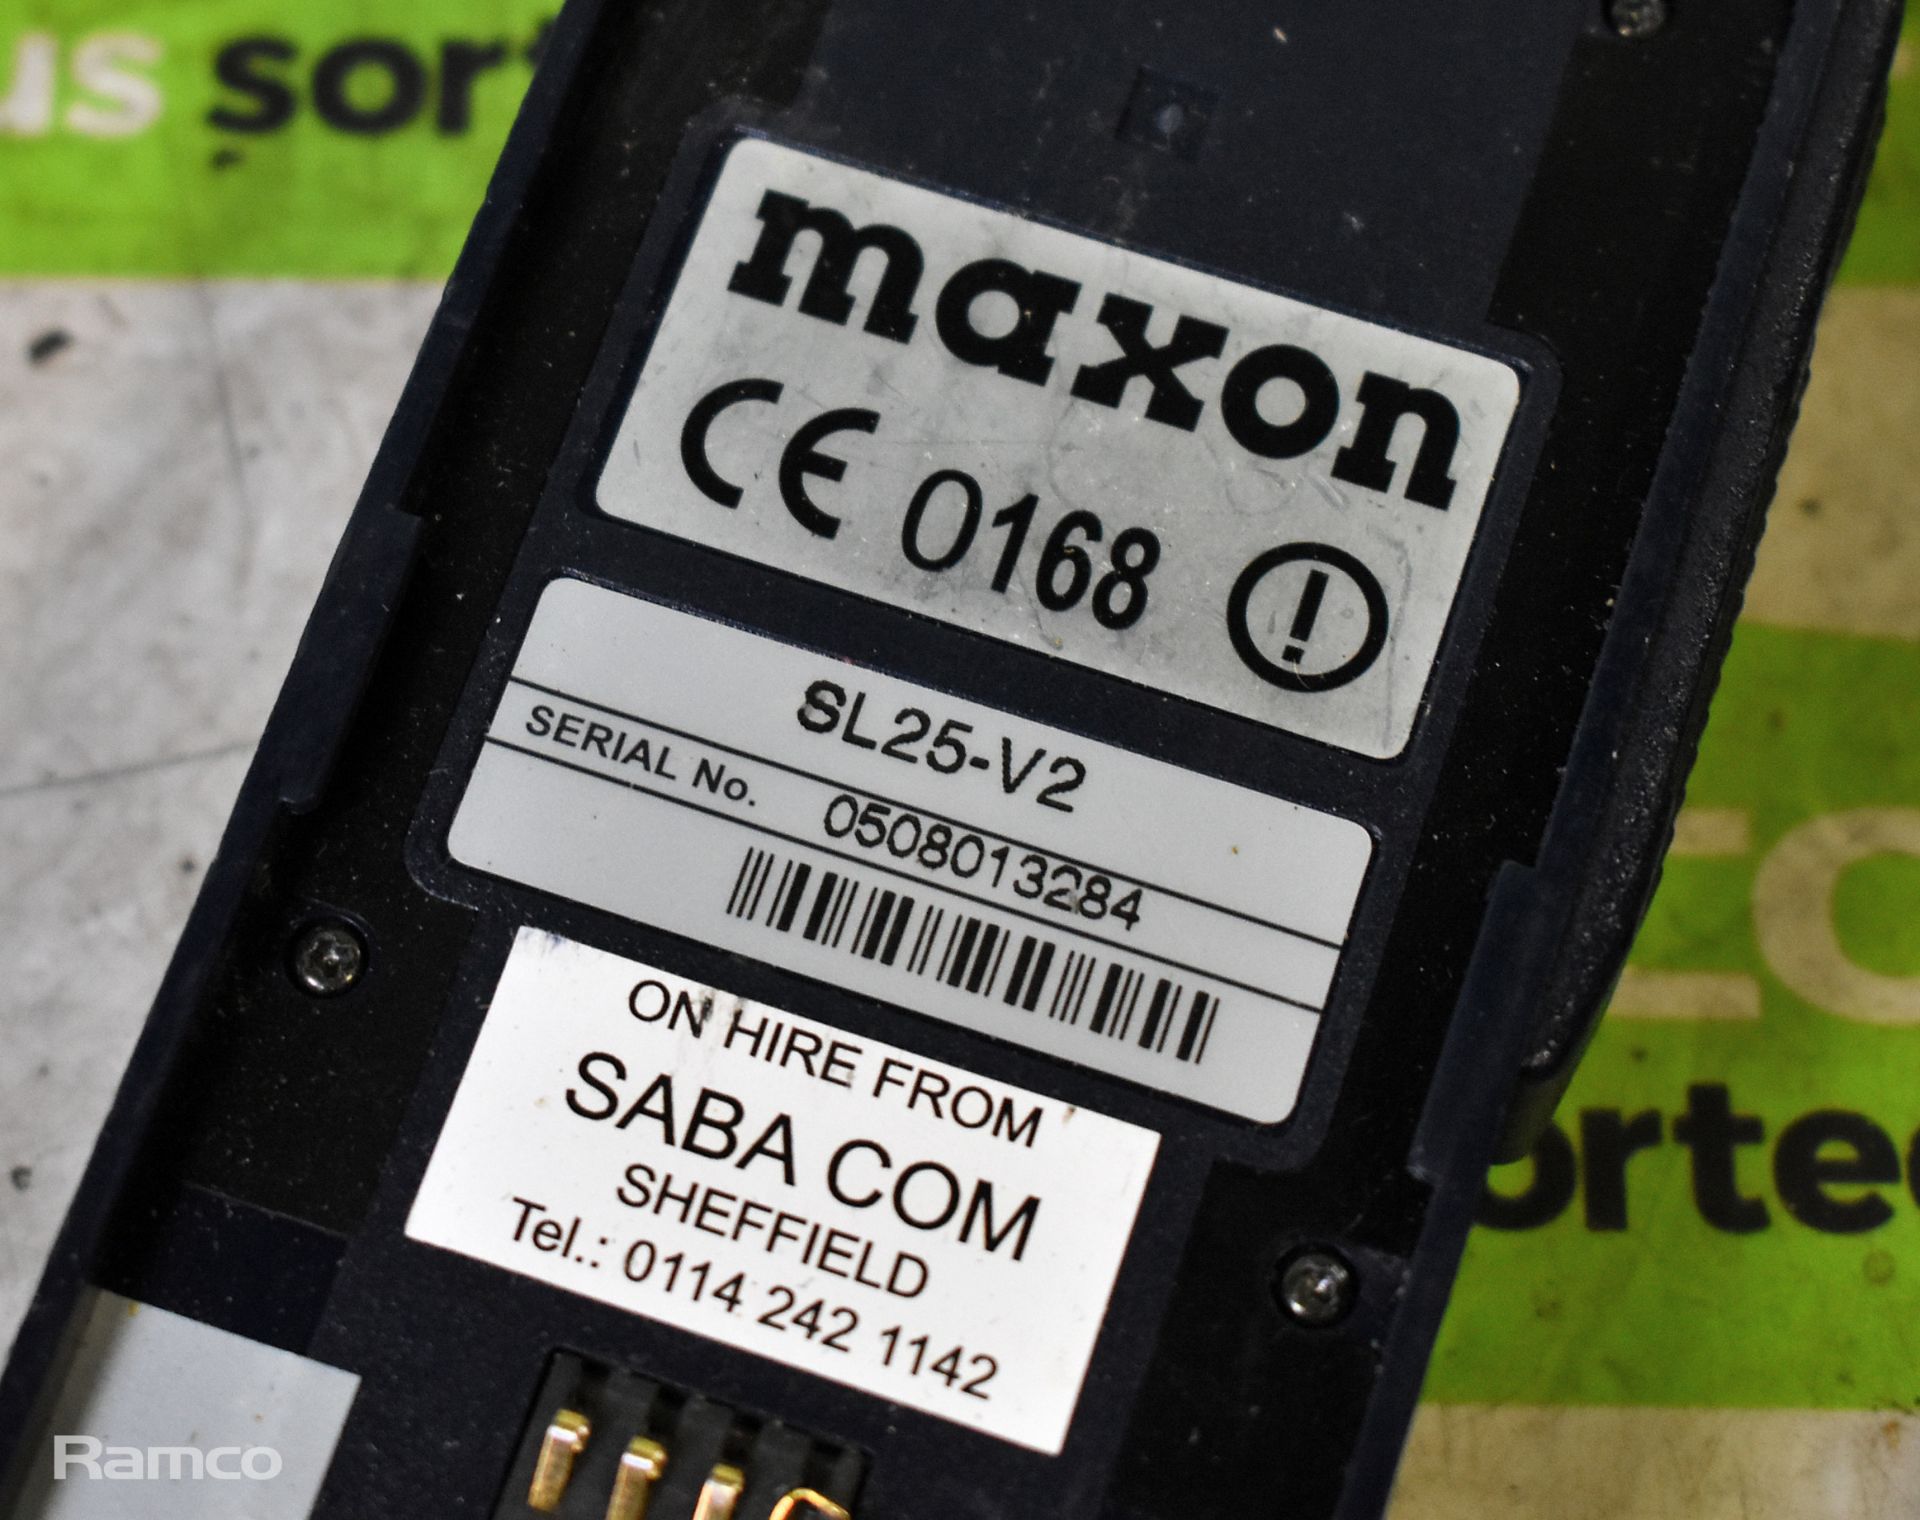 Approx 57x assorted two way radios - 19x Motorola GP900, 19x GP300, 10x Vertex, 1x Icom, 1x Maxon - Image 3 of 6